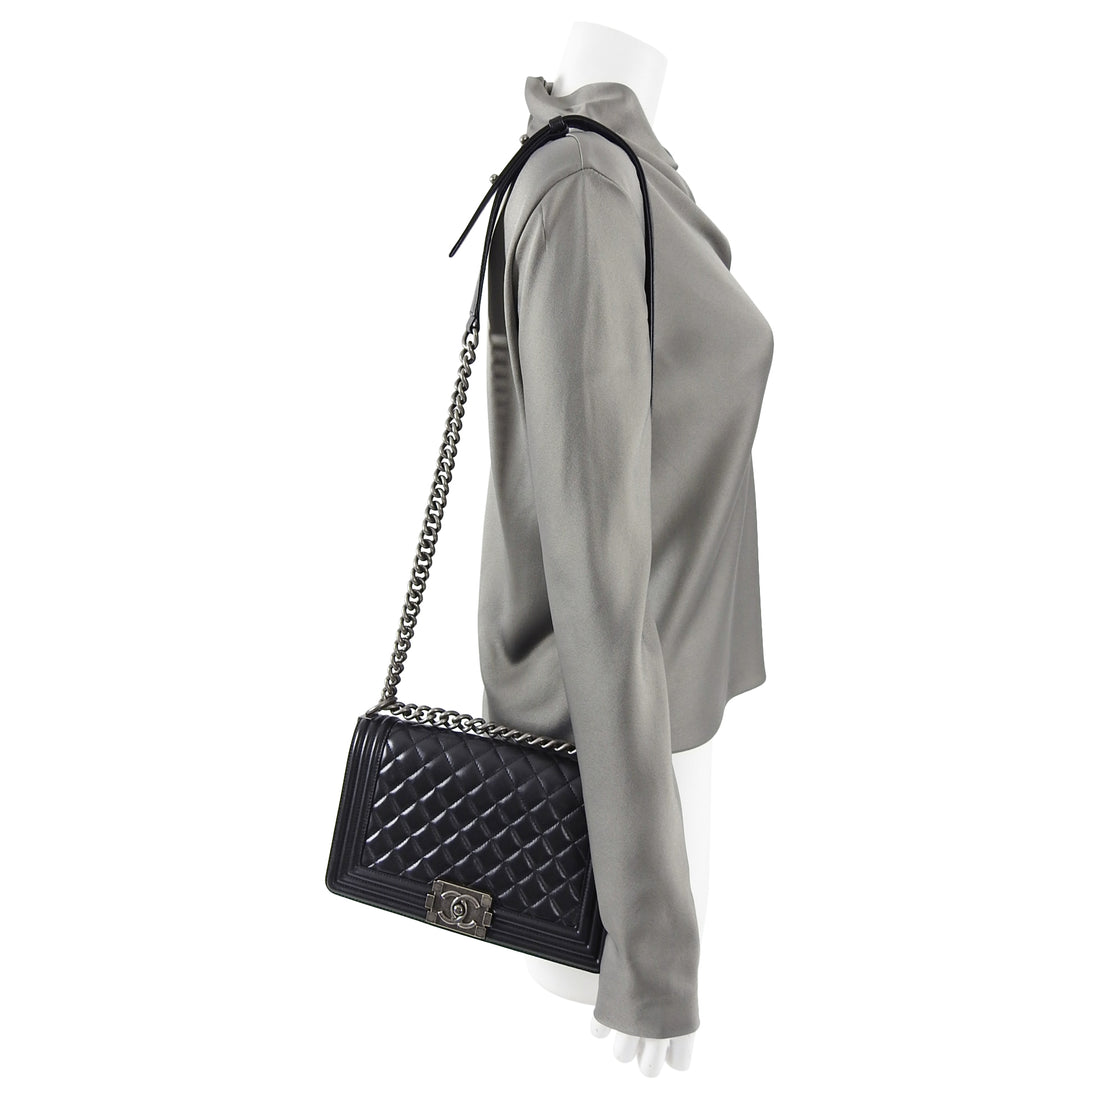 Chanel Boy Ruthenium Finish Medium Black Quilted Leather Bag